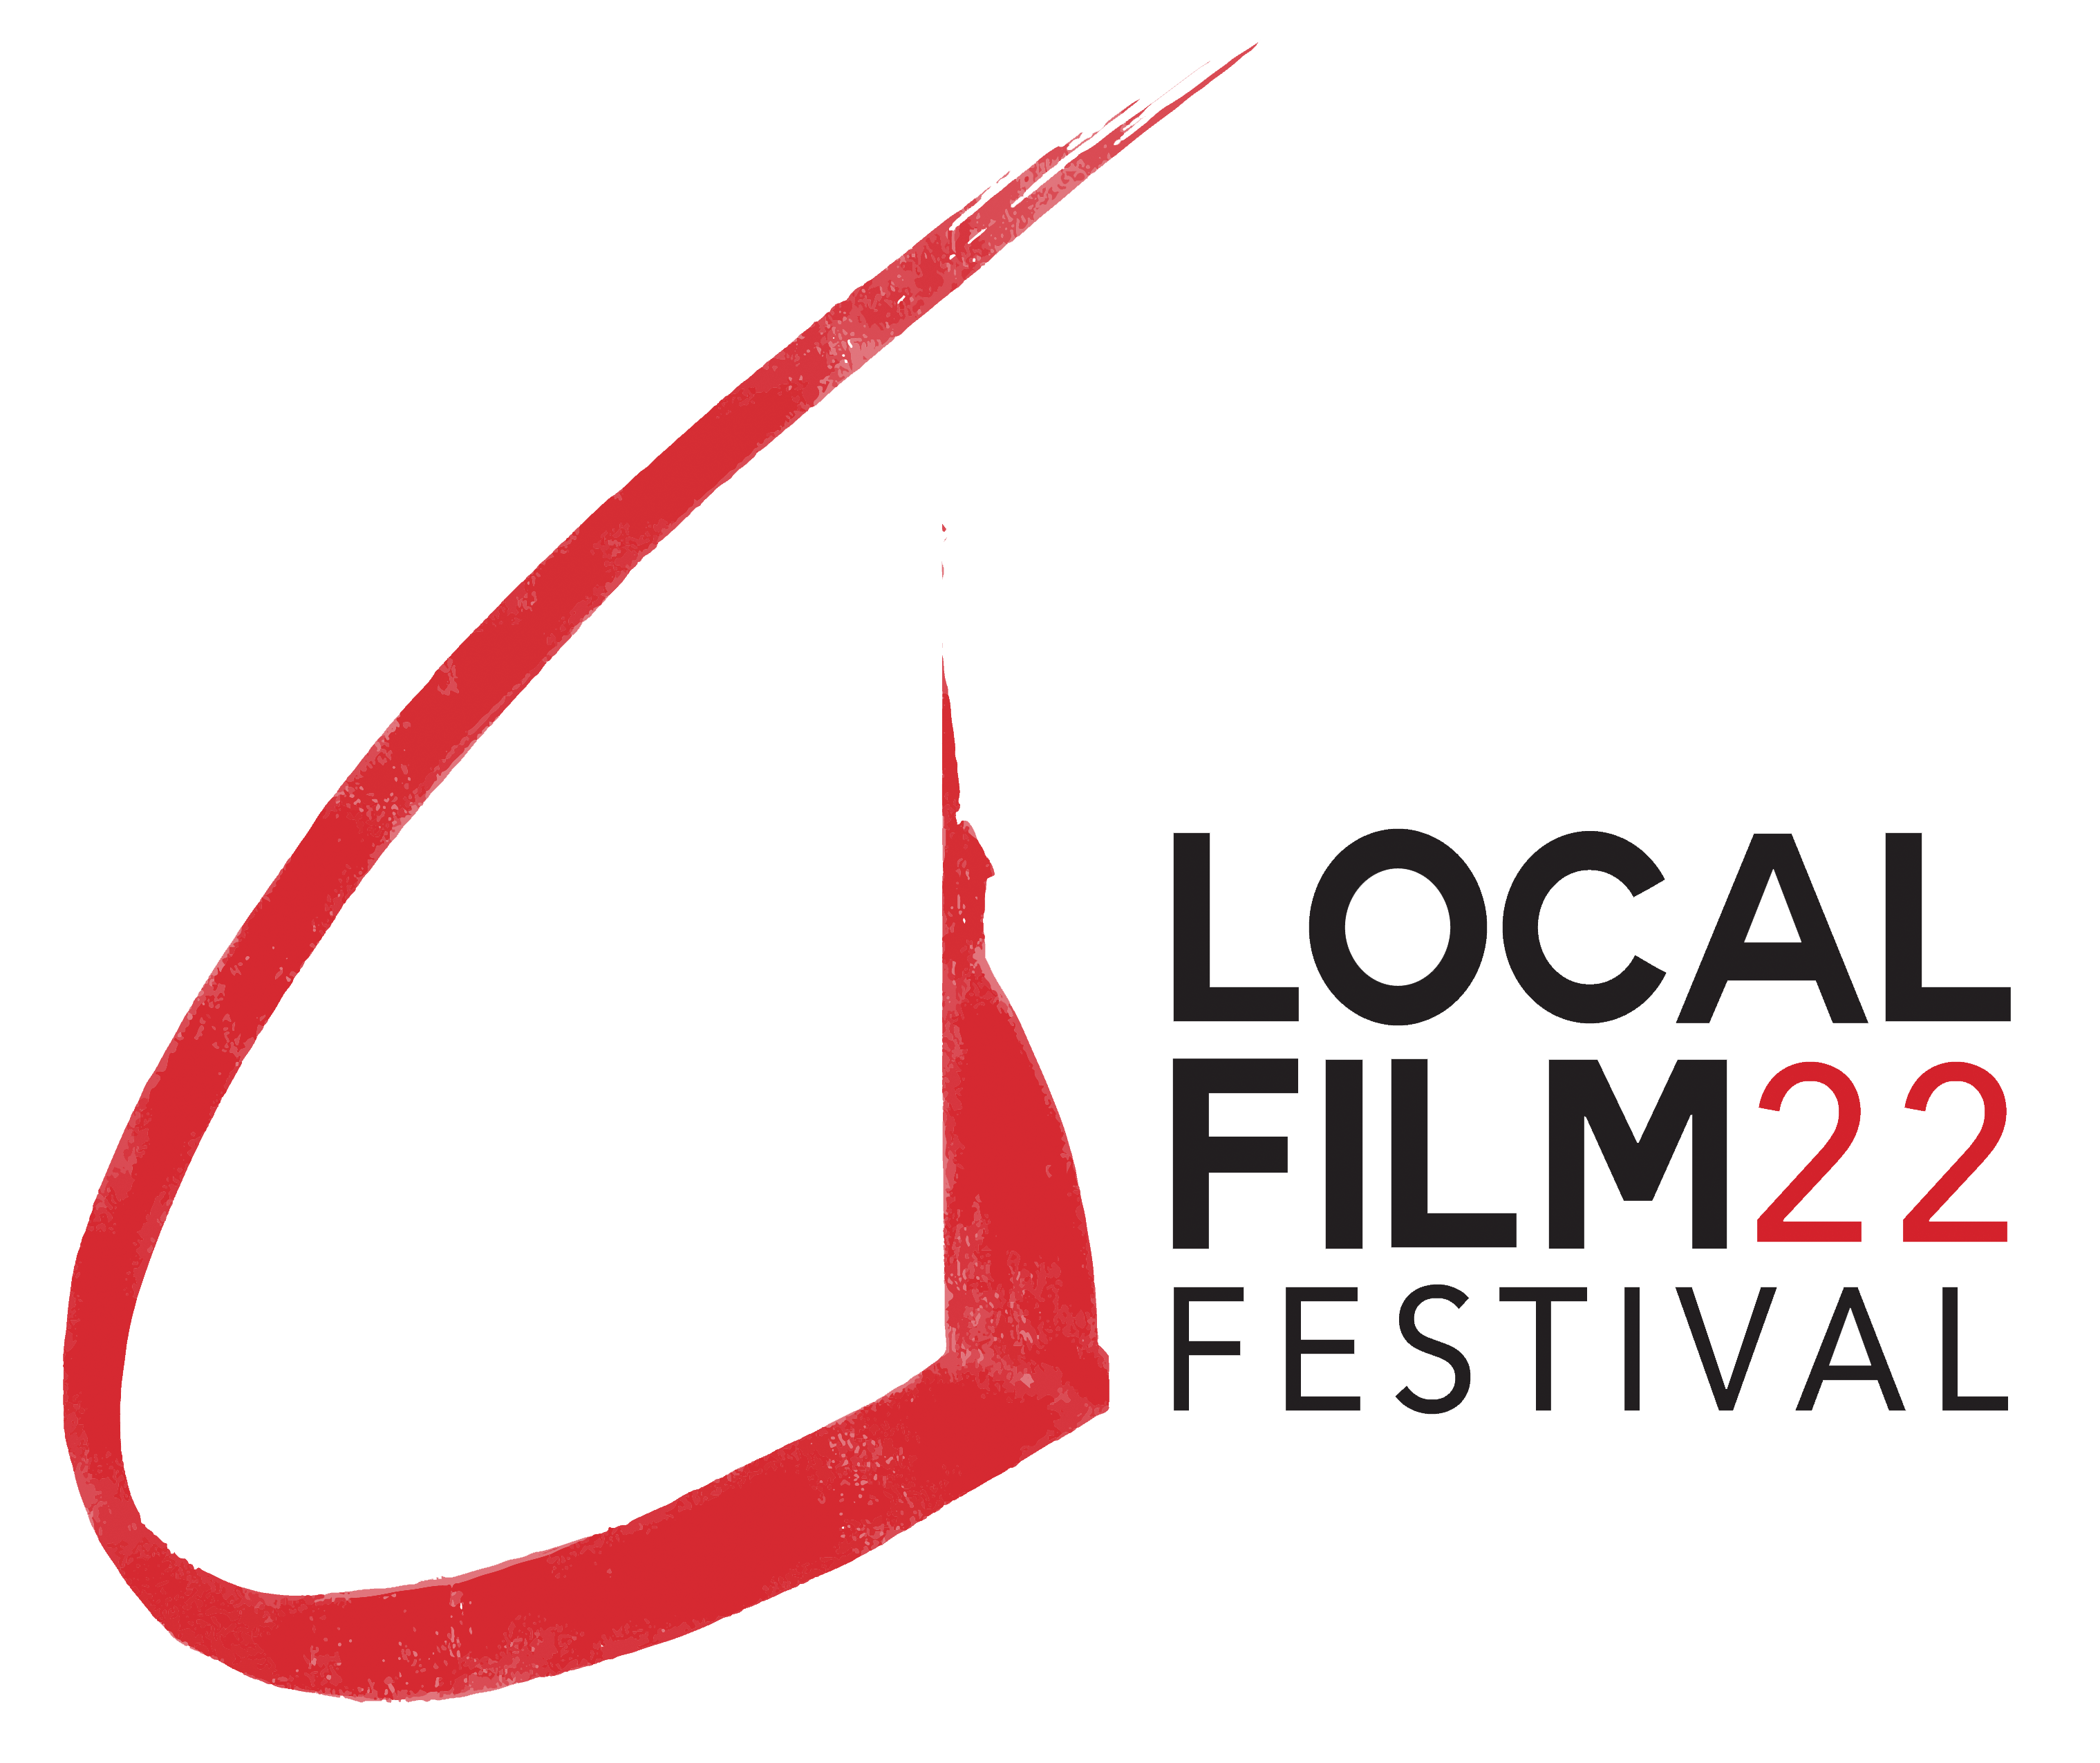 Glocal Film Festival